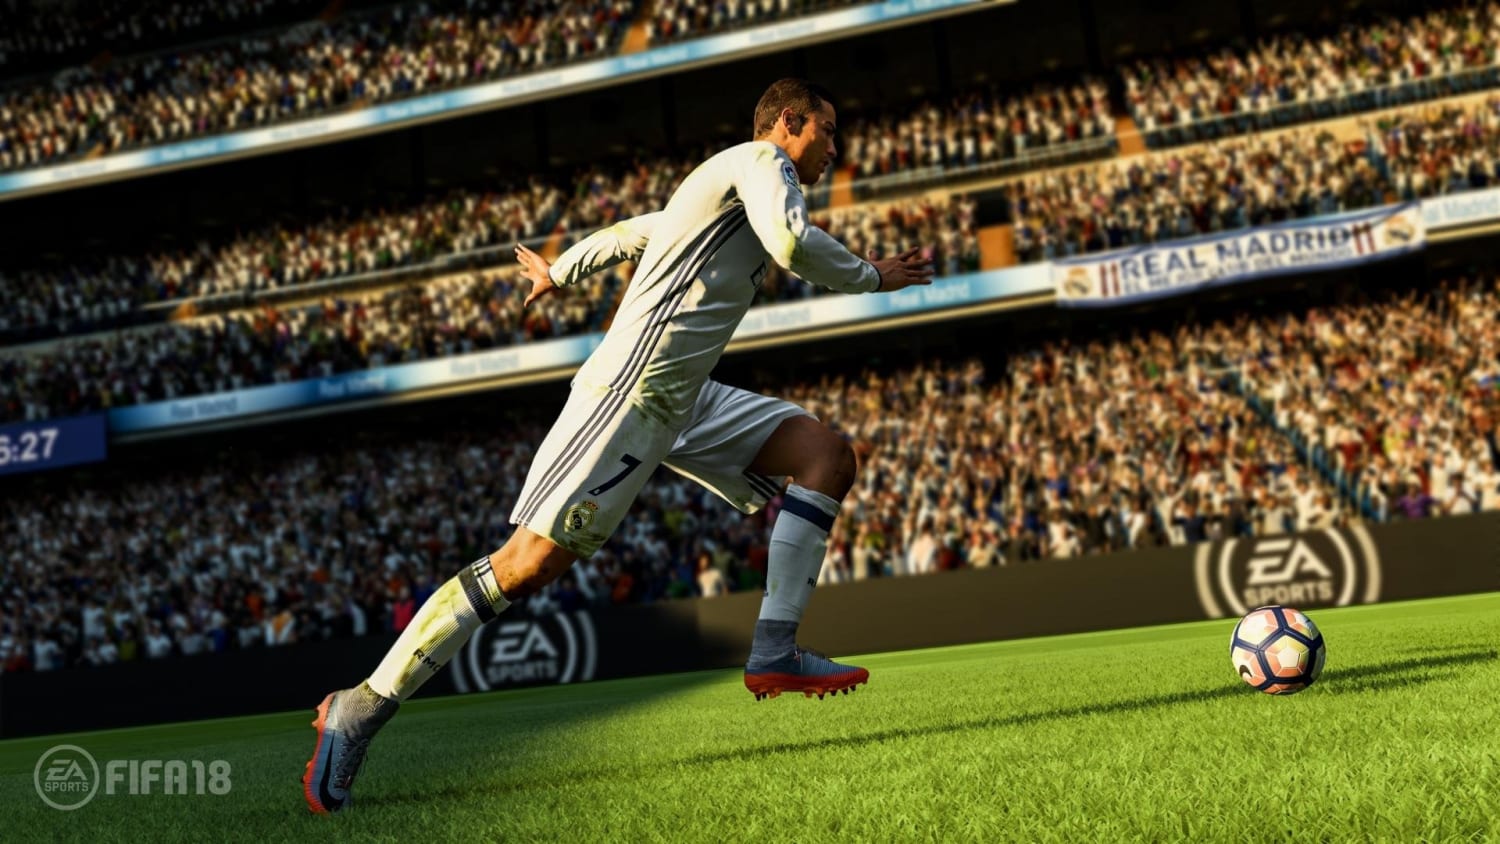 dealer elke dag Indica FIFA 18 preview, gameplay and verdict | Red Bull Games